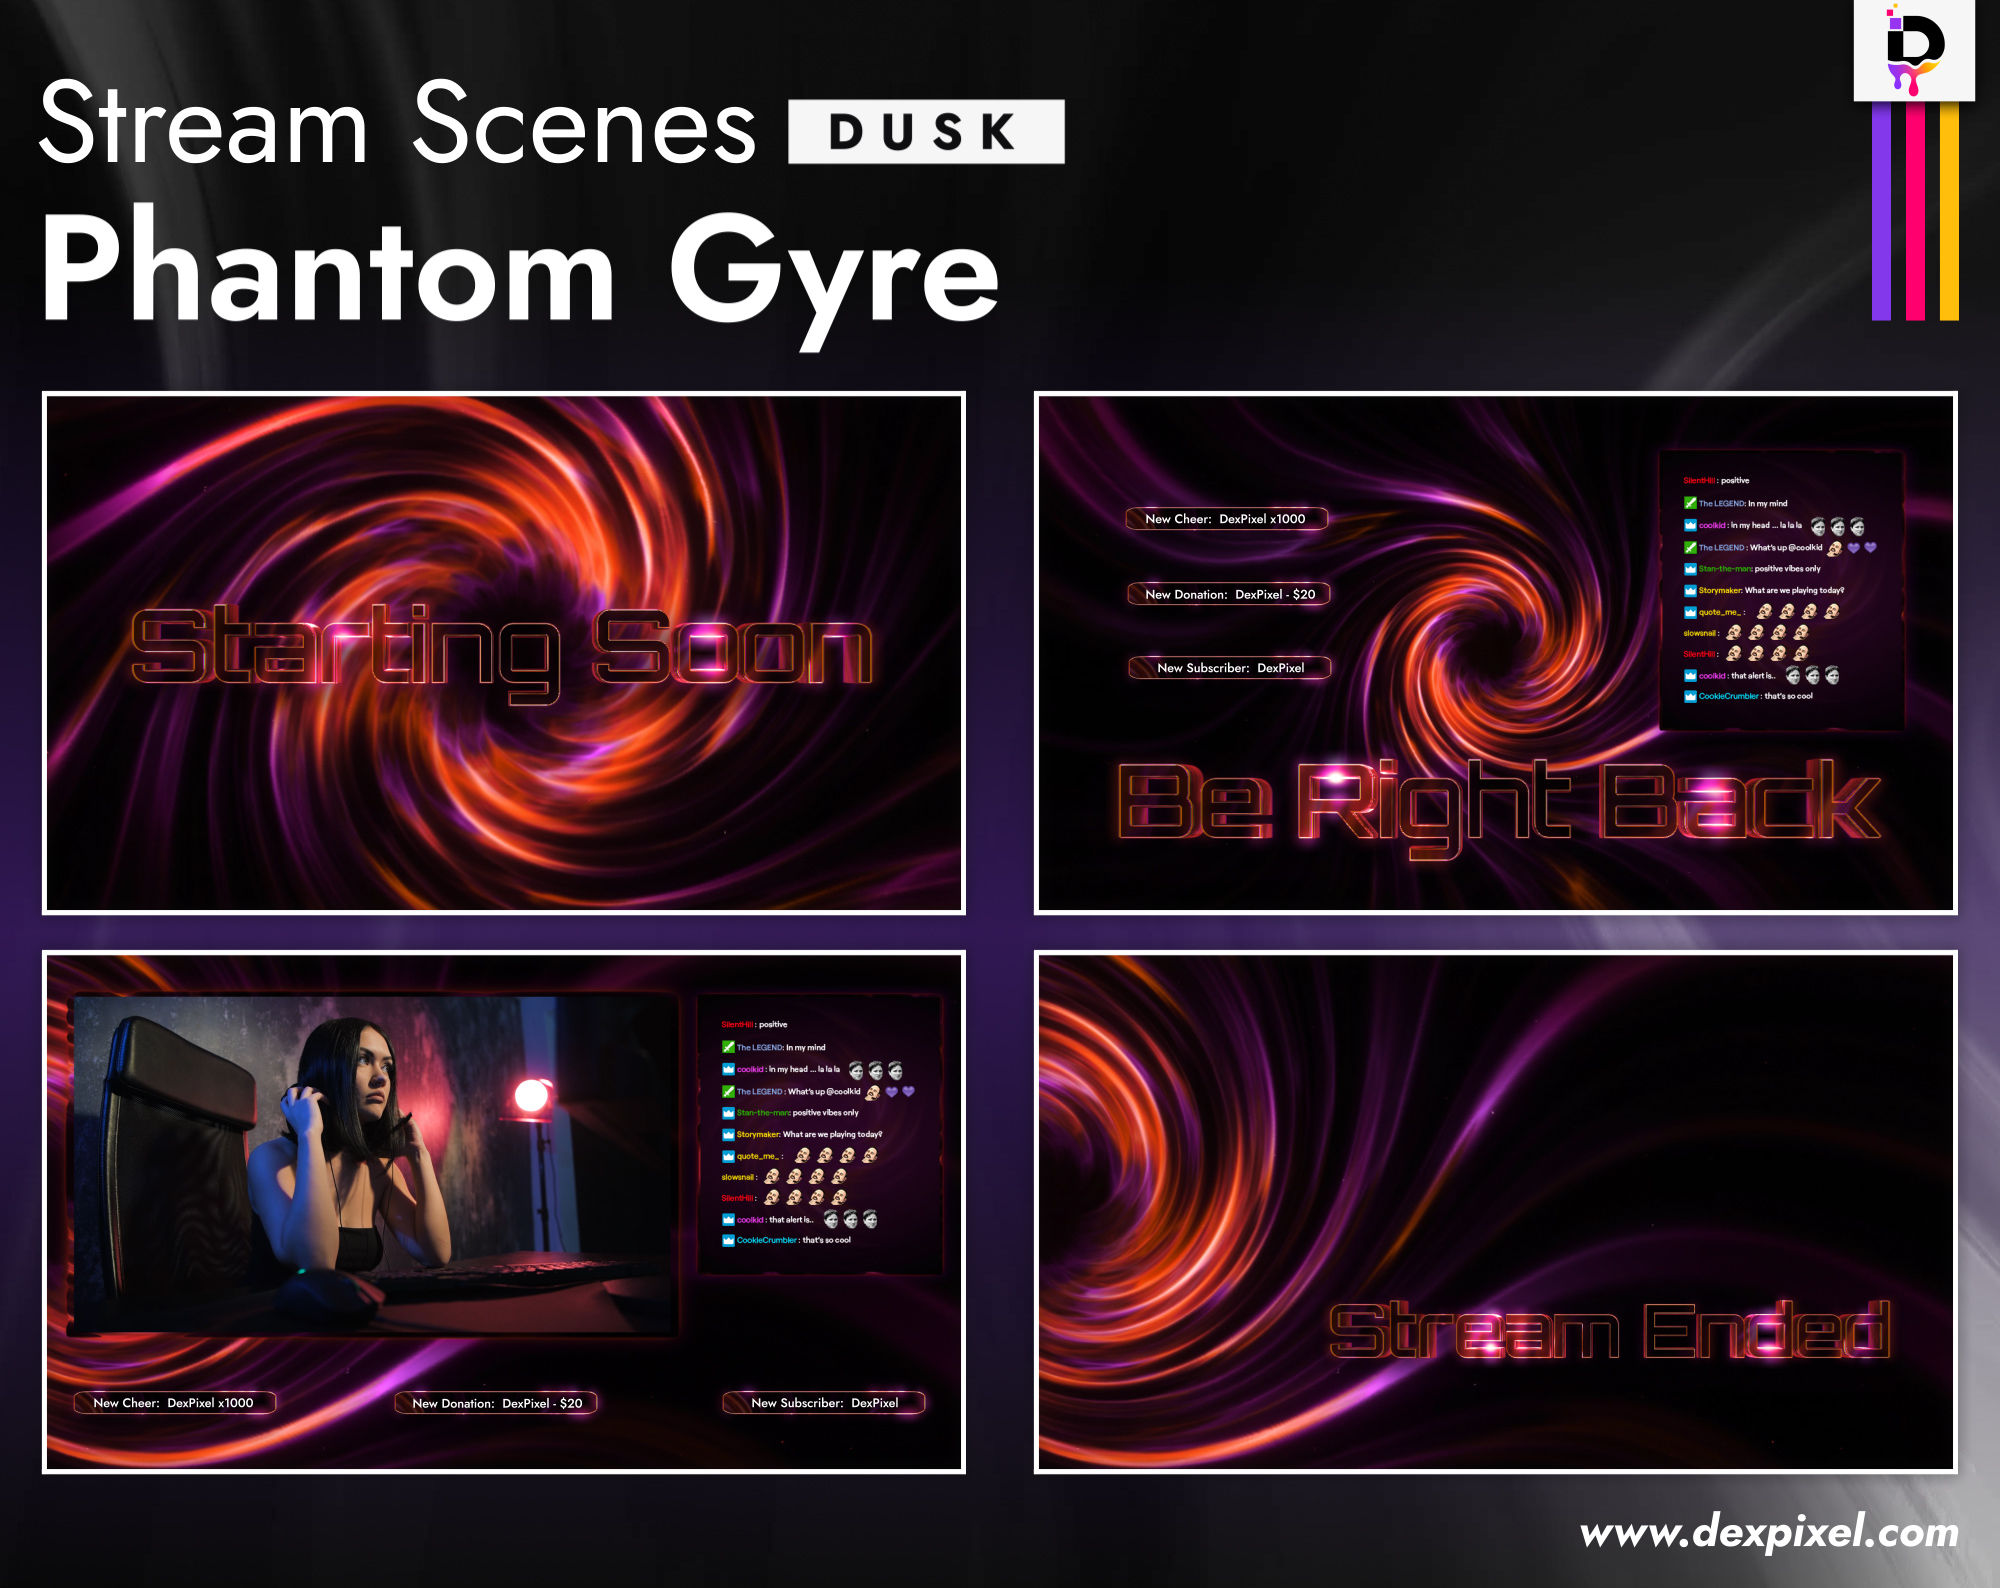 Stream Scenes Dexpixel Thumbnail Phantom Gyre Dusk